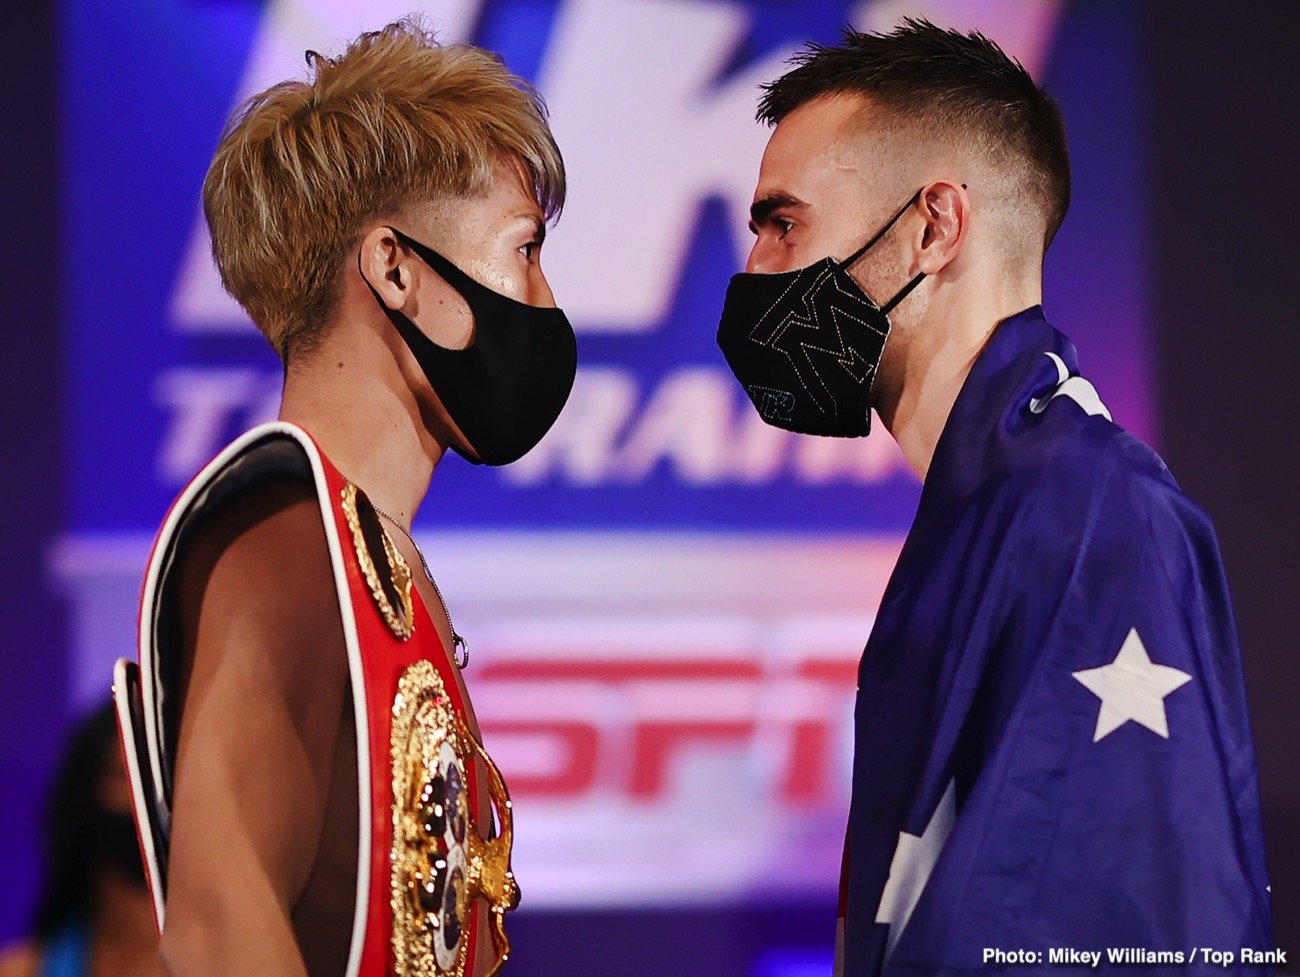 Jared Anderson, Jason Moloney, Naoya Inoue boxing image / photo